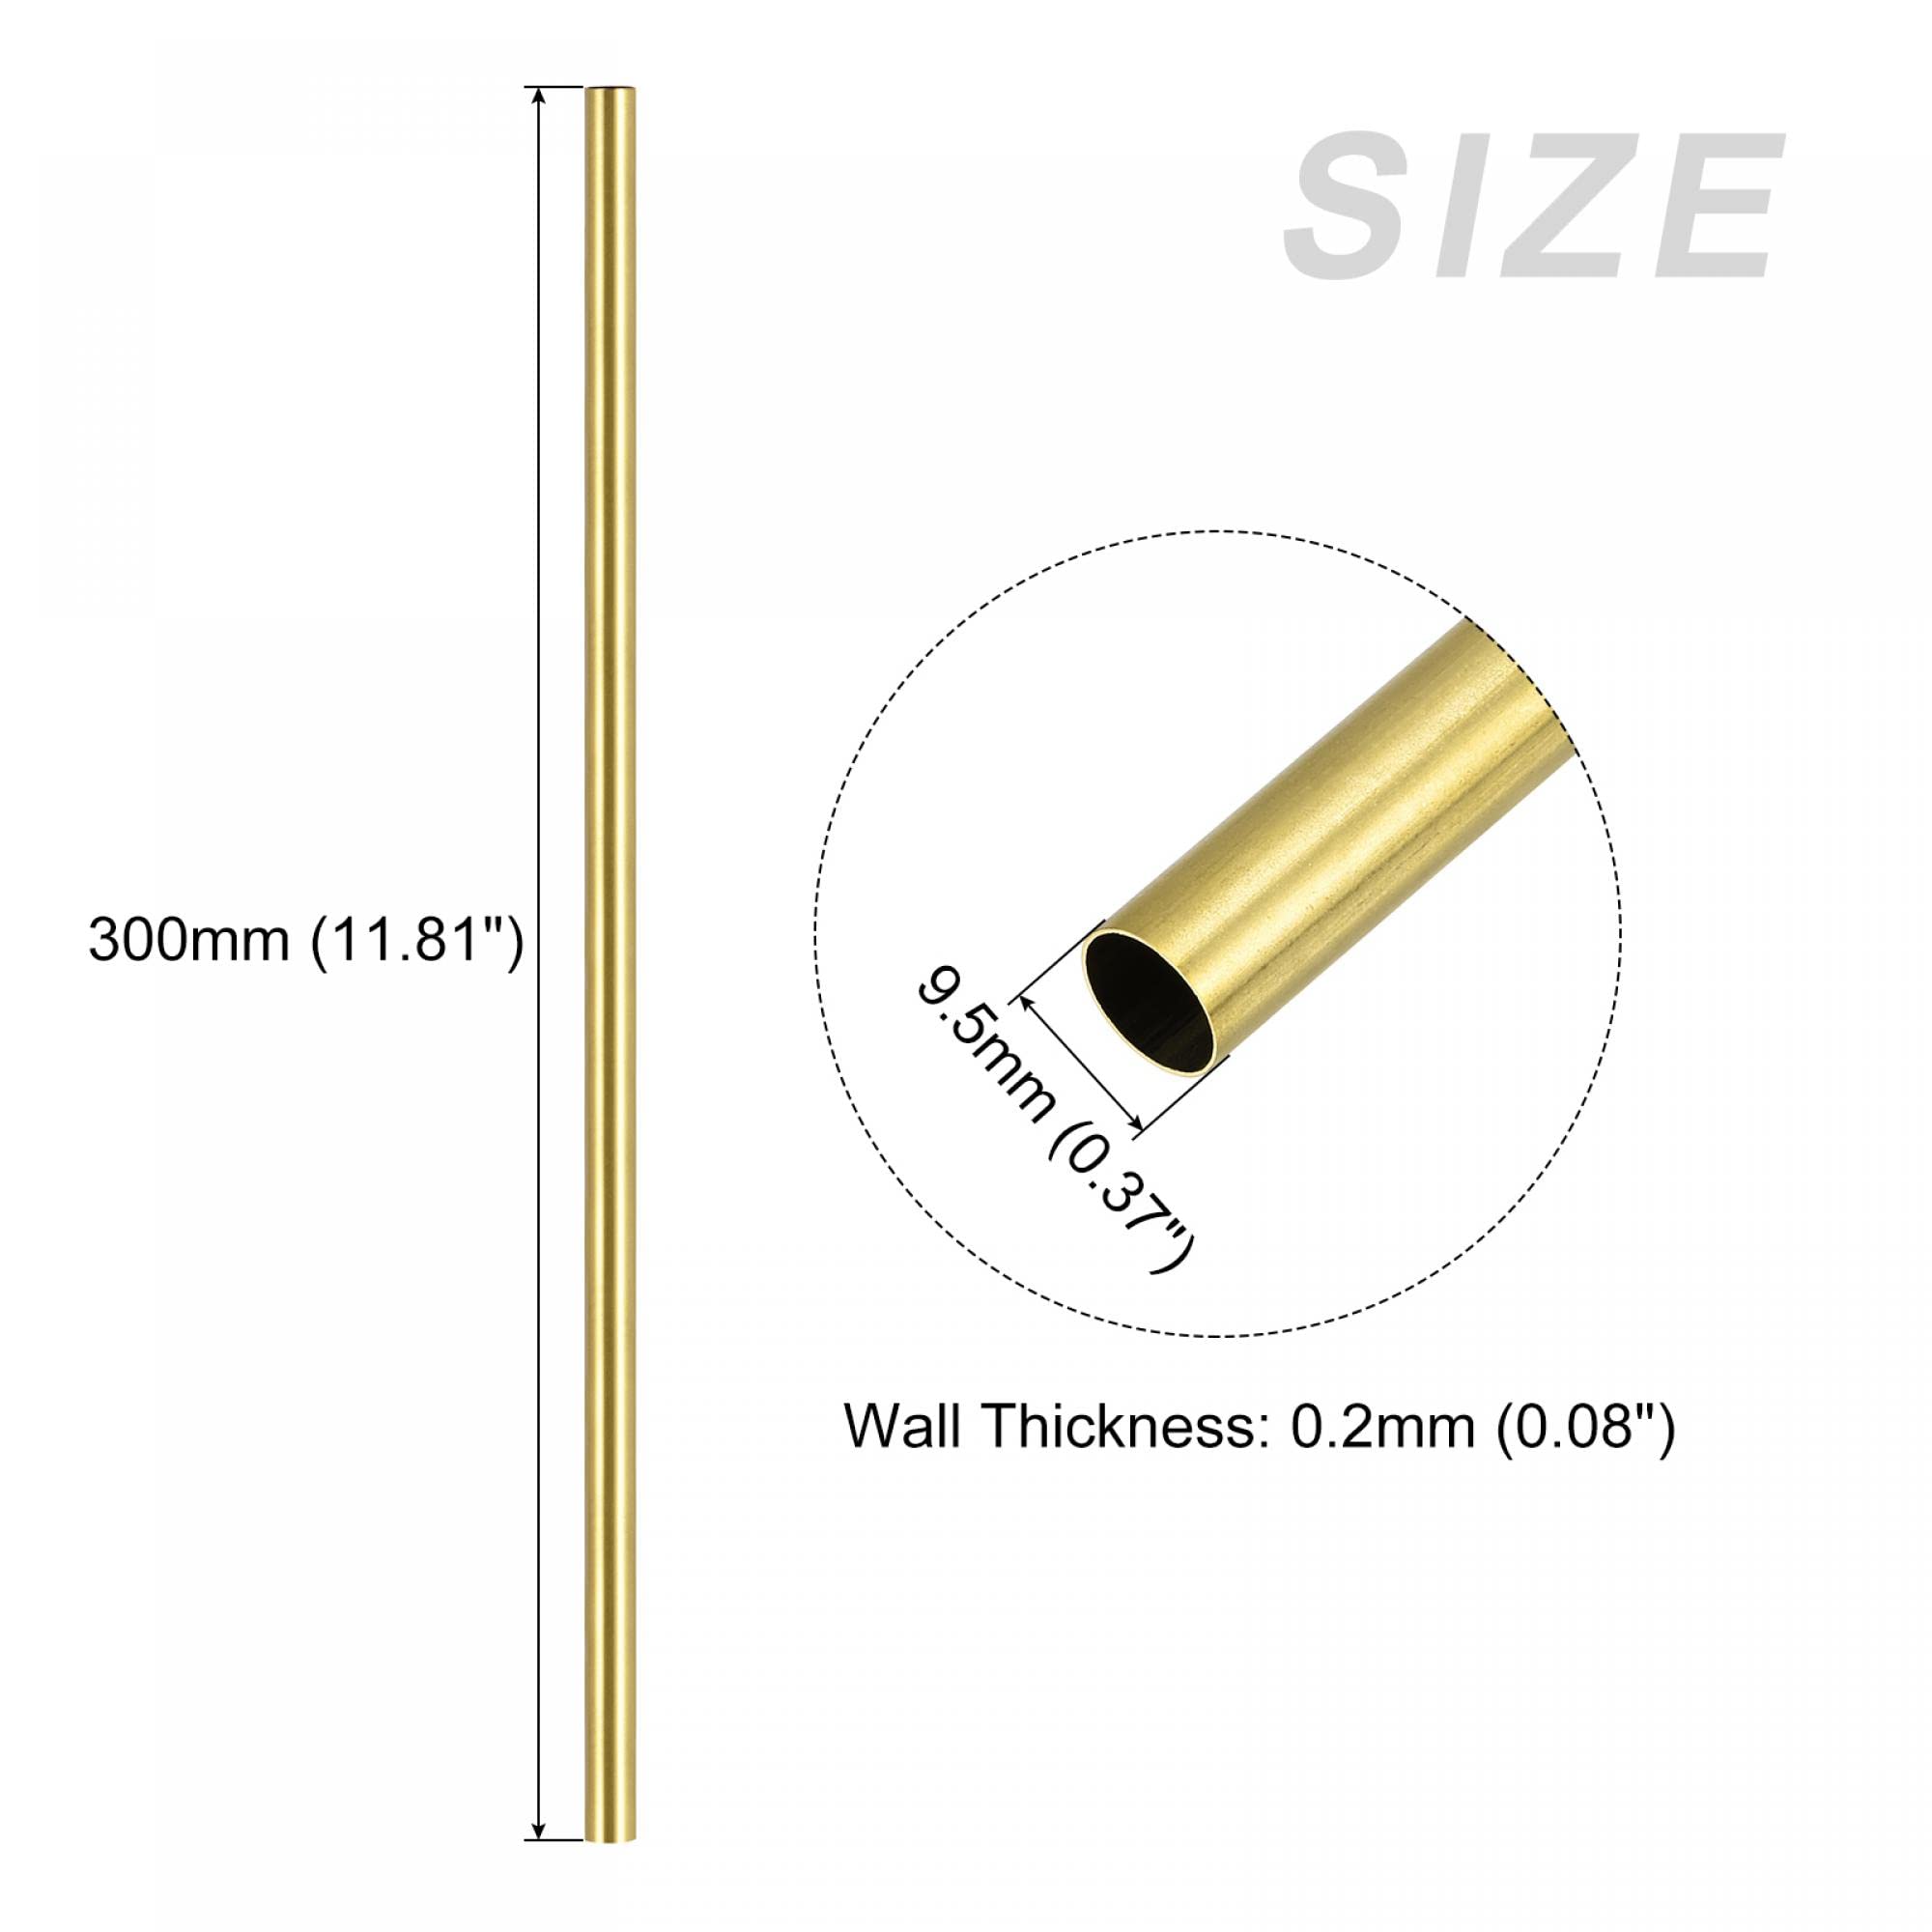 sourcing map Brass Tube (9.5mm OD x 0.2mm Wall T x 300mm L) 3Pcs, Straight Tubing - for Home Furnishing, Machinery, DIY Handicraft